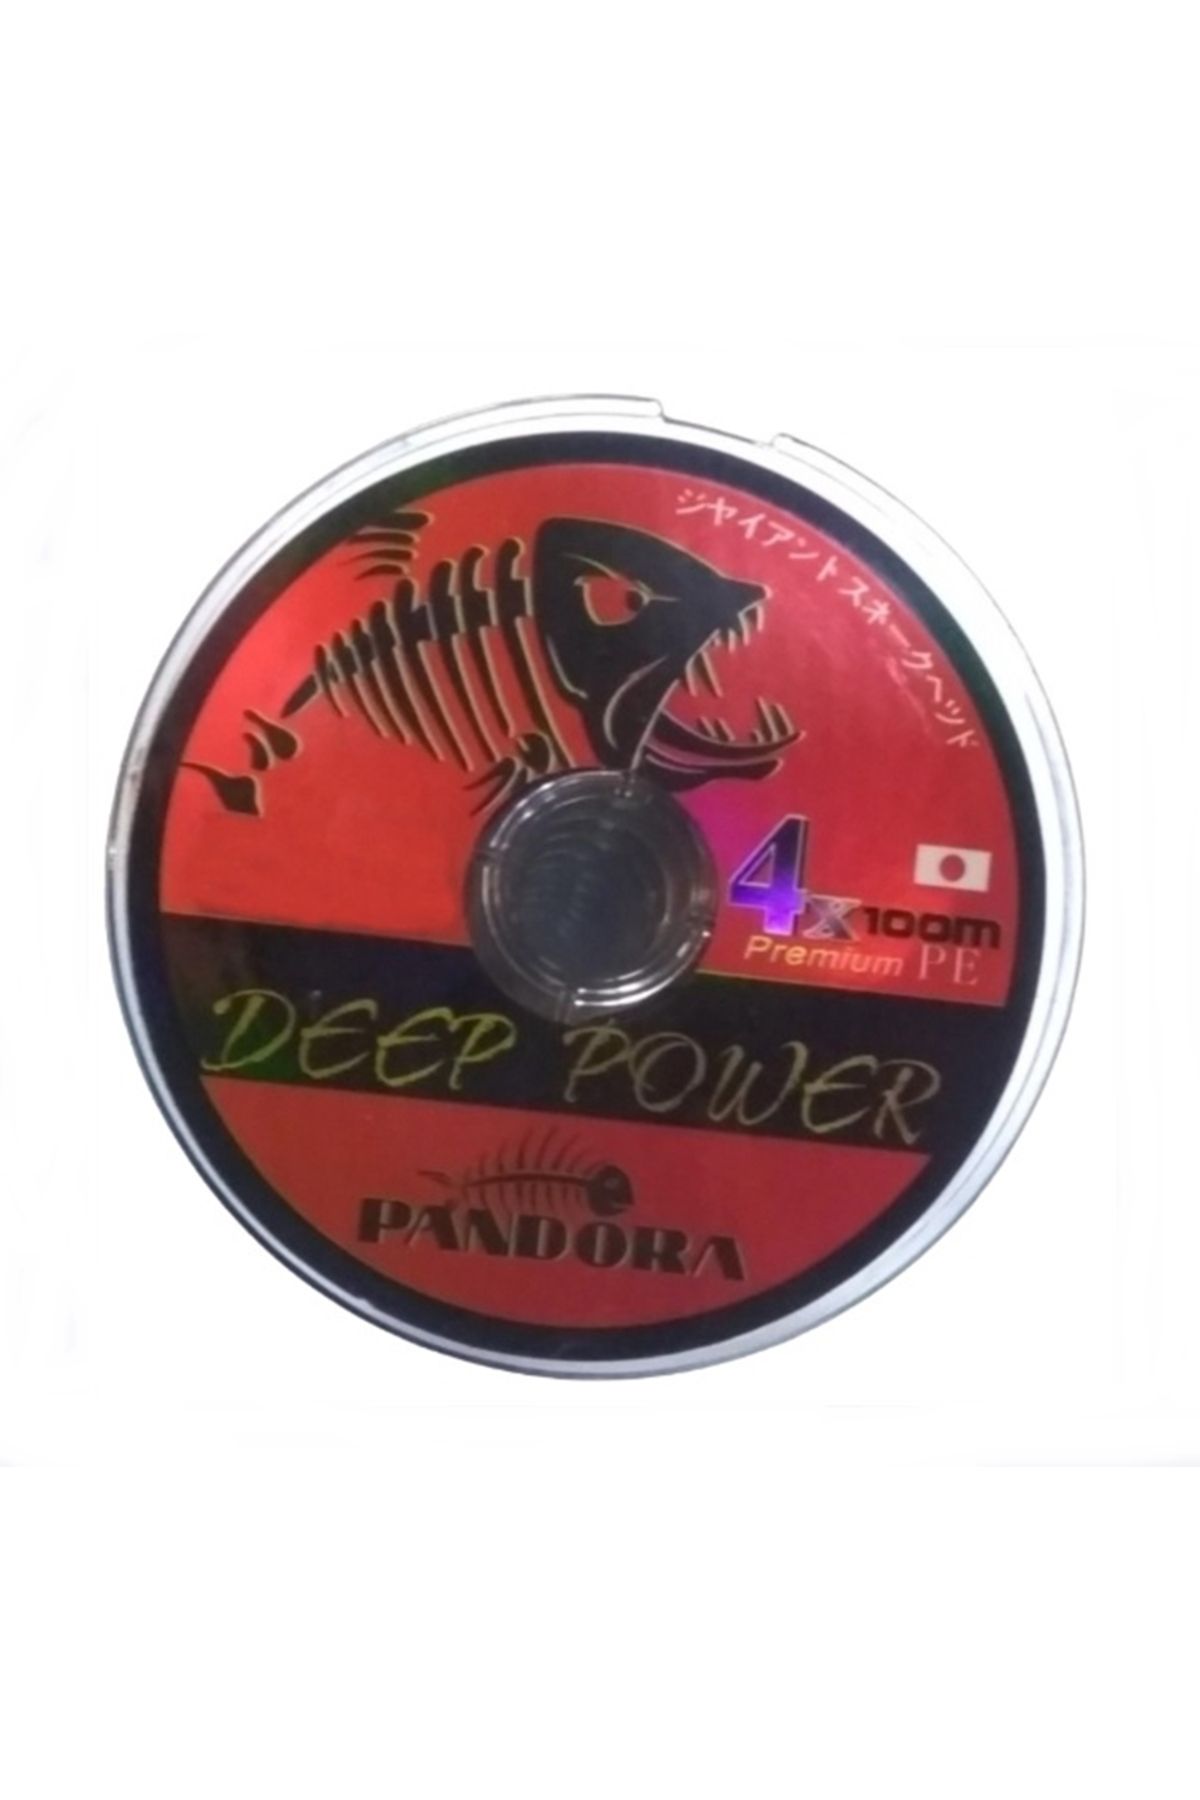 Pandora Deep Power 4x -100m Ip Misina-26mm-17,5 Test 0.18